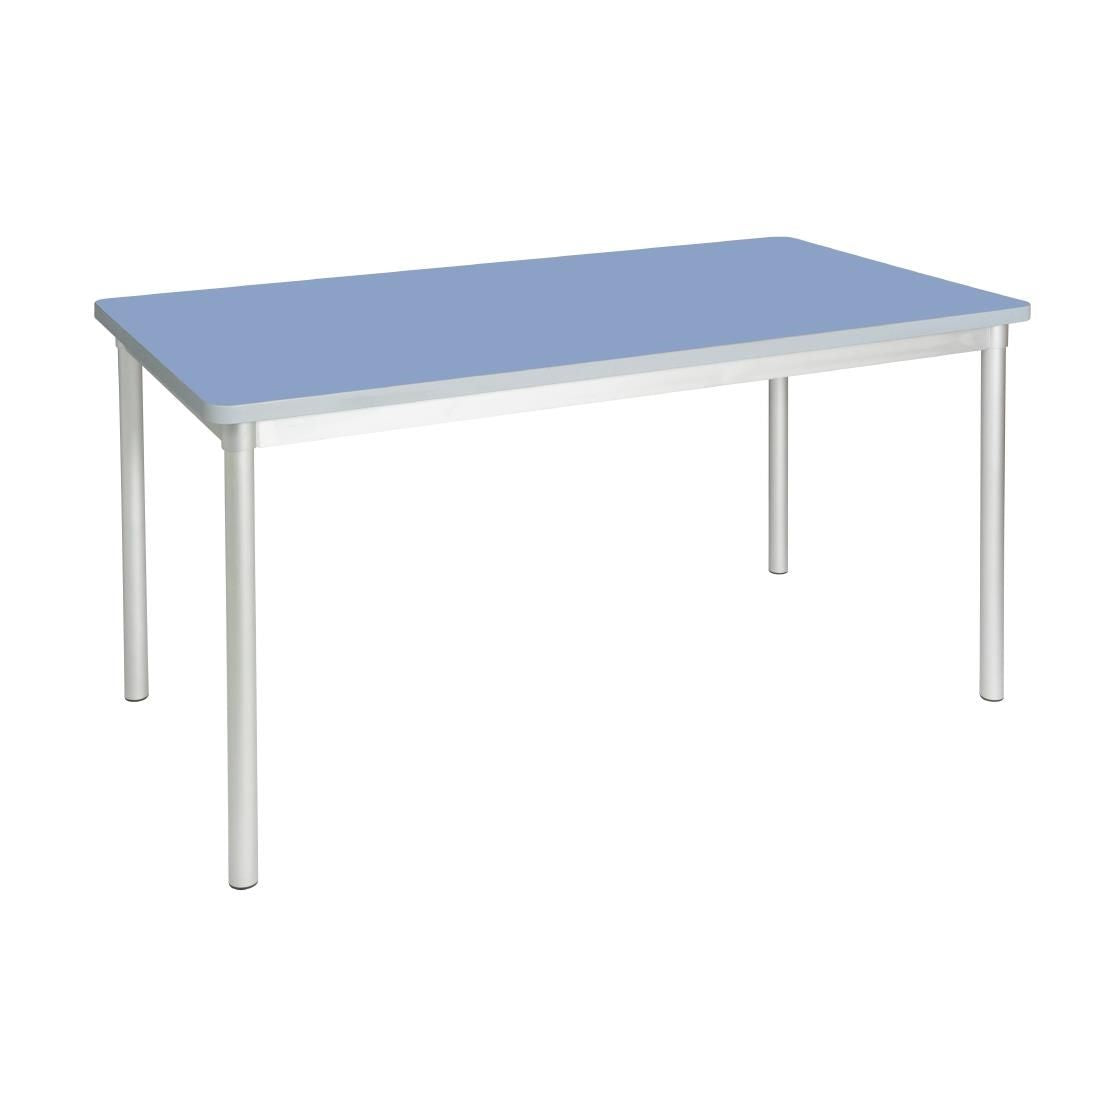 Gopak Enviro Indoor Campanula Blue Rectangle Dining Table 1400mm JD Catering Equipment Solutions Ltd